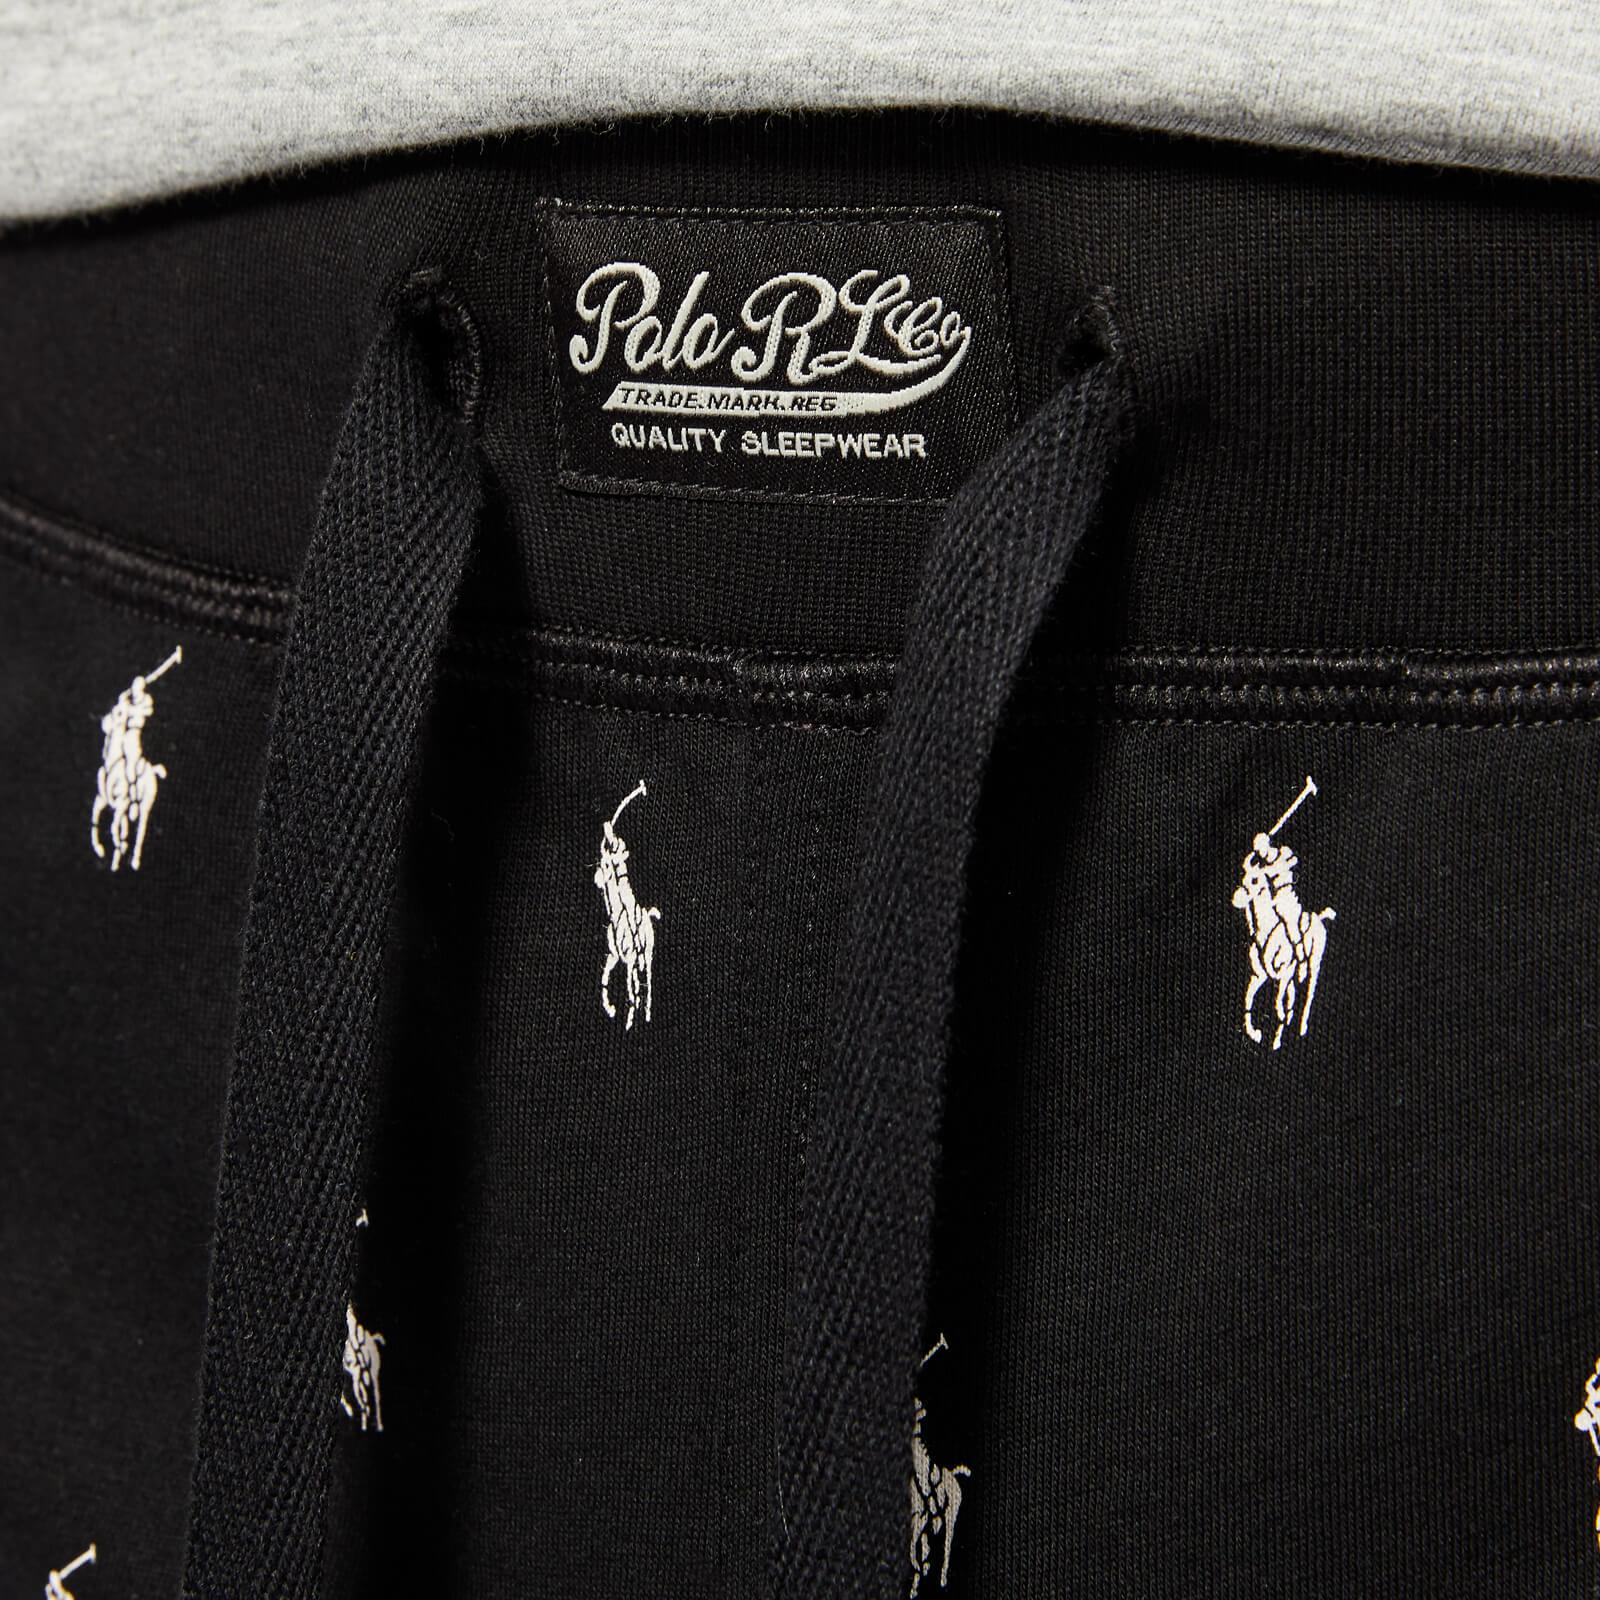 Polo Ralph Lauren All Over Pony Shorts in Black for Men - Lyst